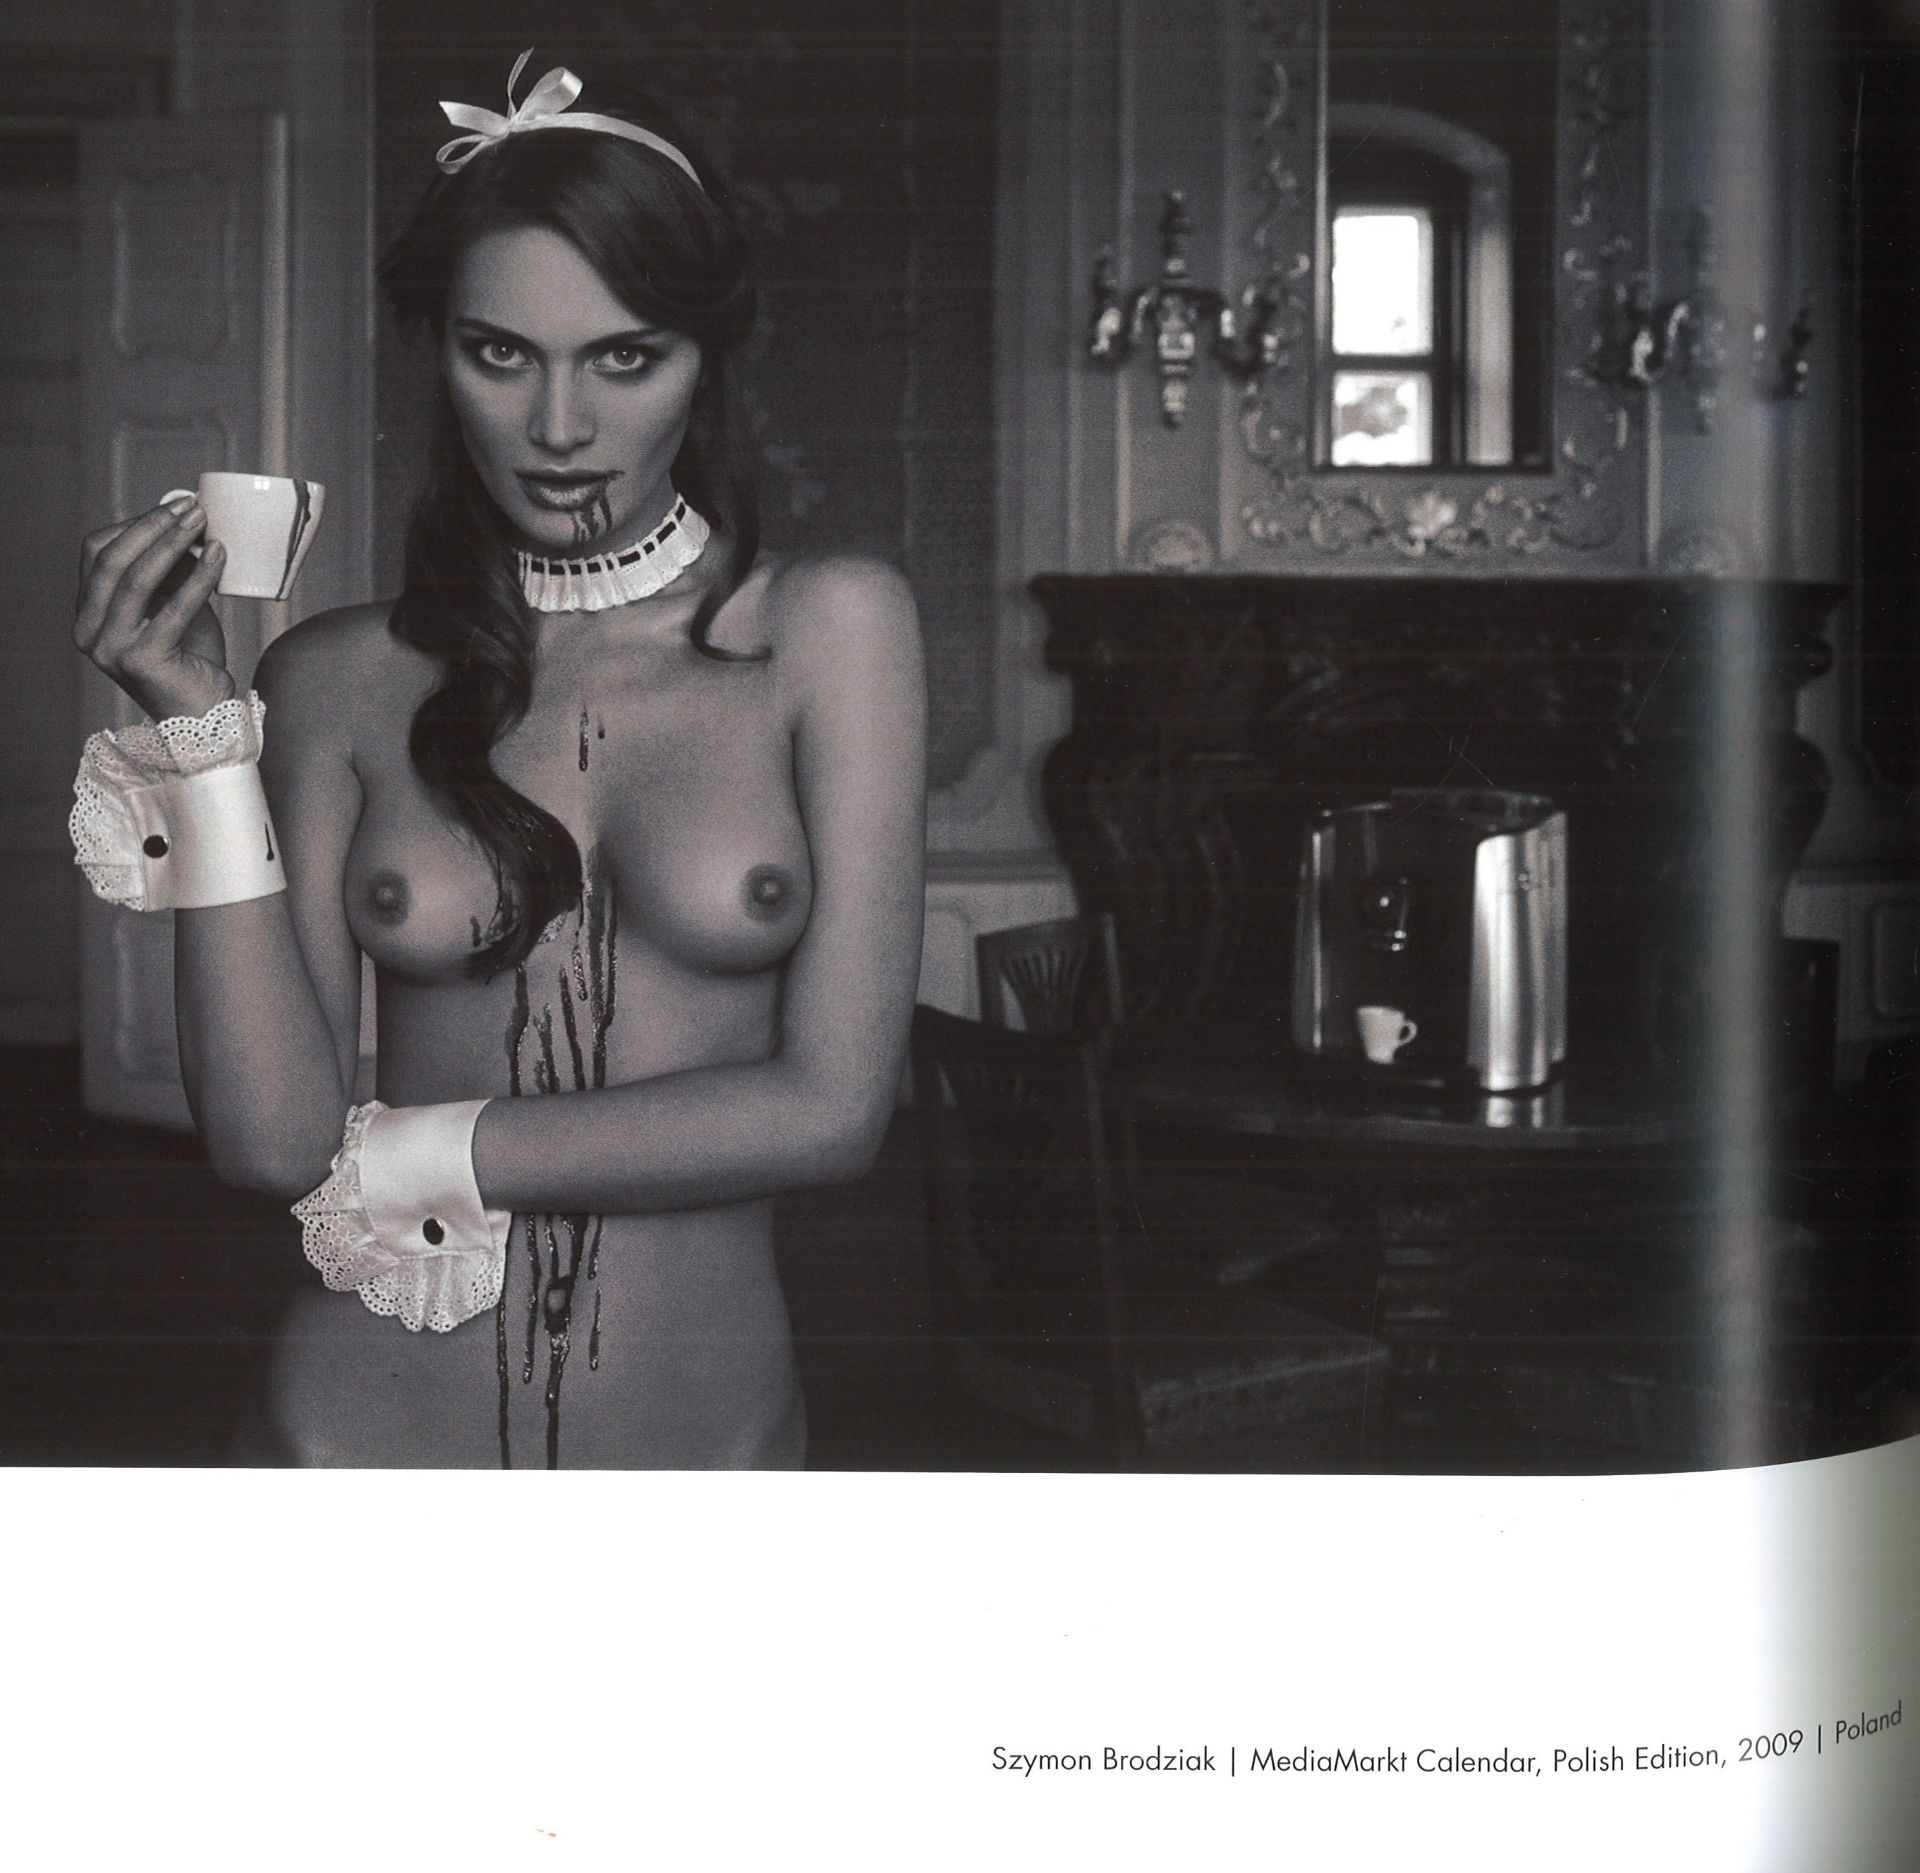 Erotica 1. "The Nude in Contemporary Photography". Verlag: art photo akt edition, 2014. Designed - Bild 3 aus 4